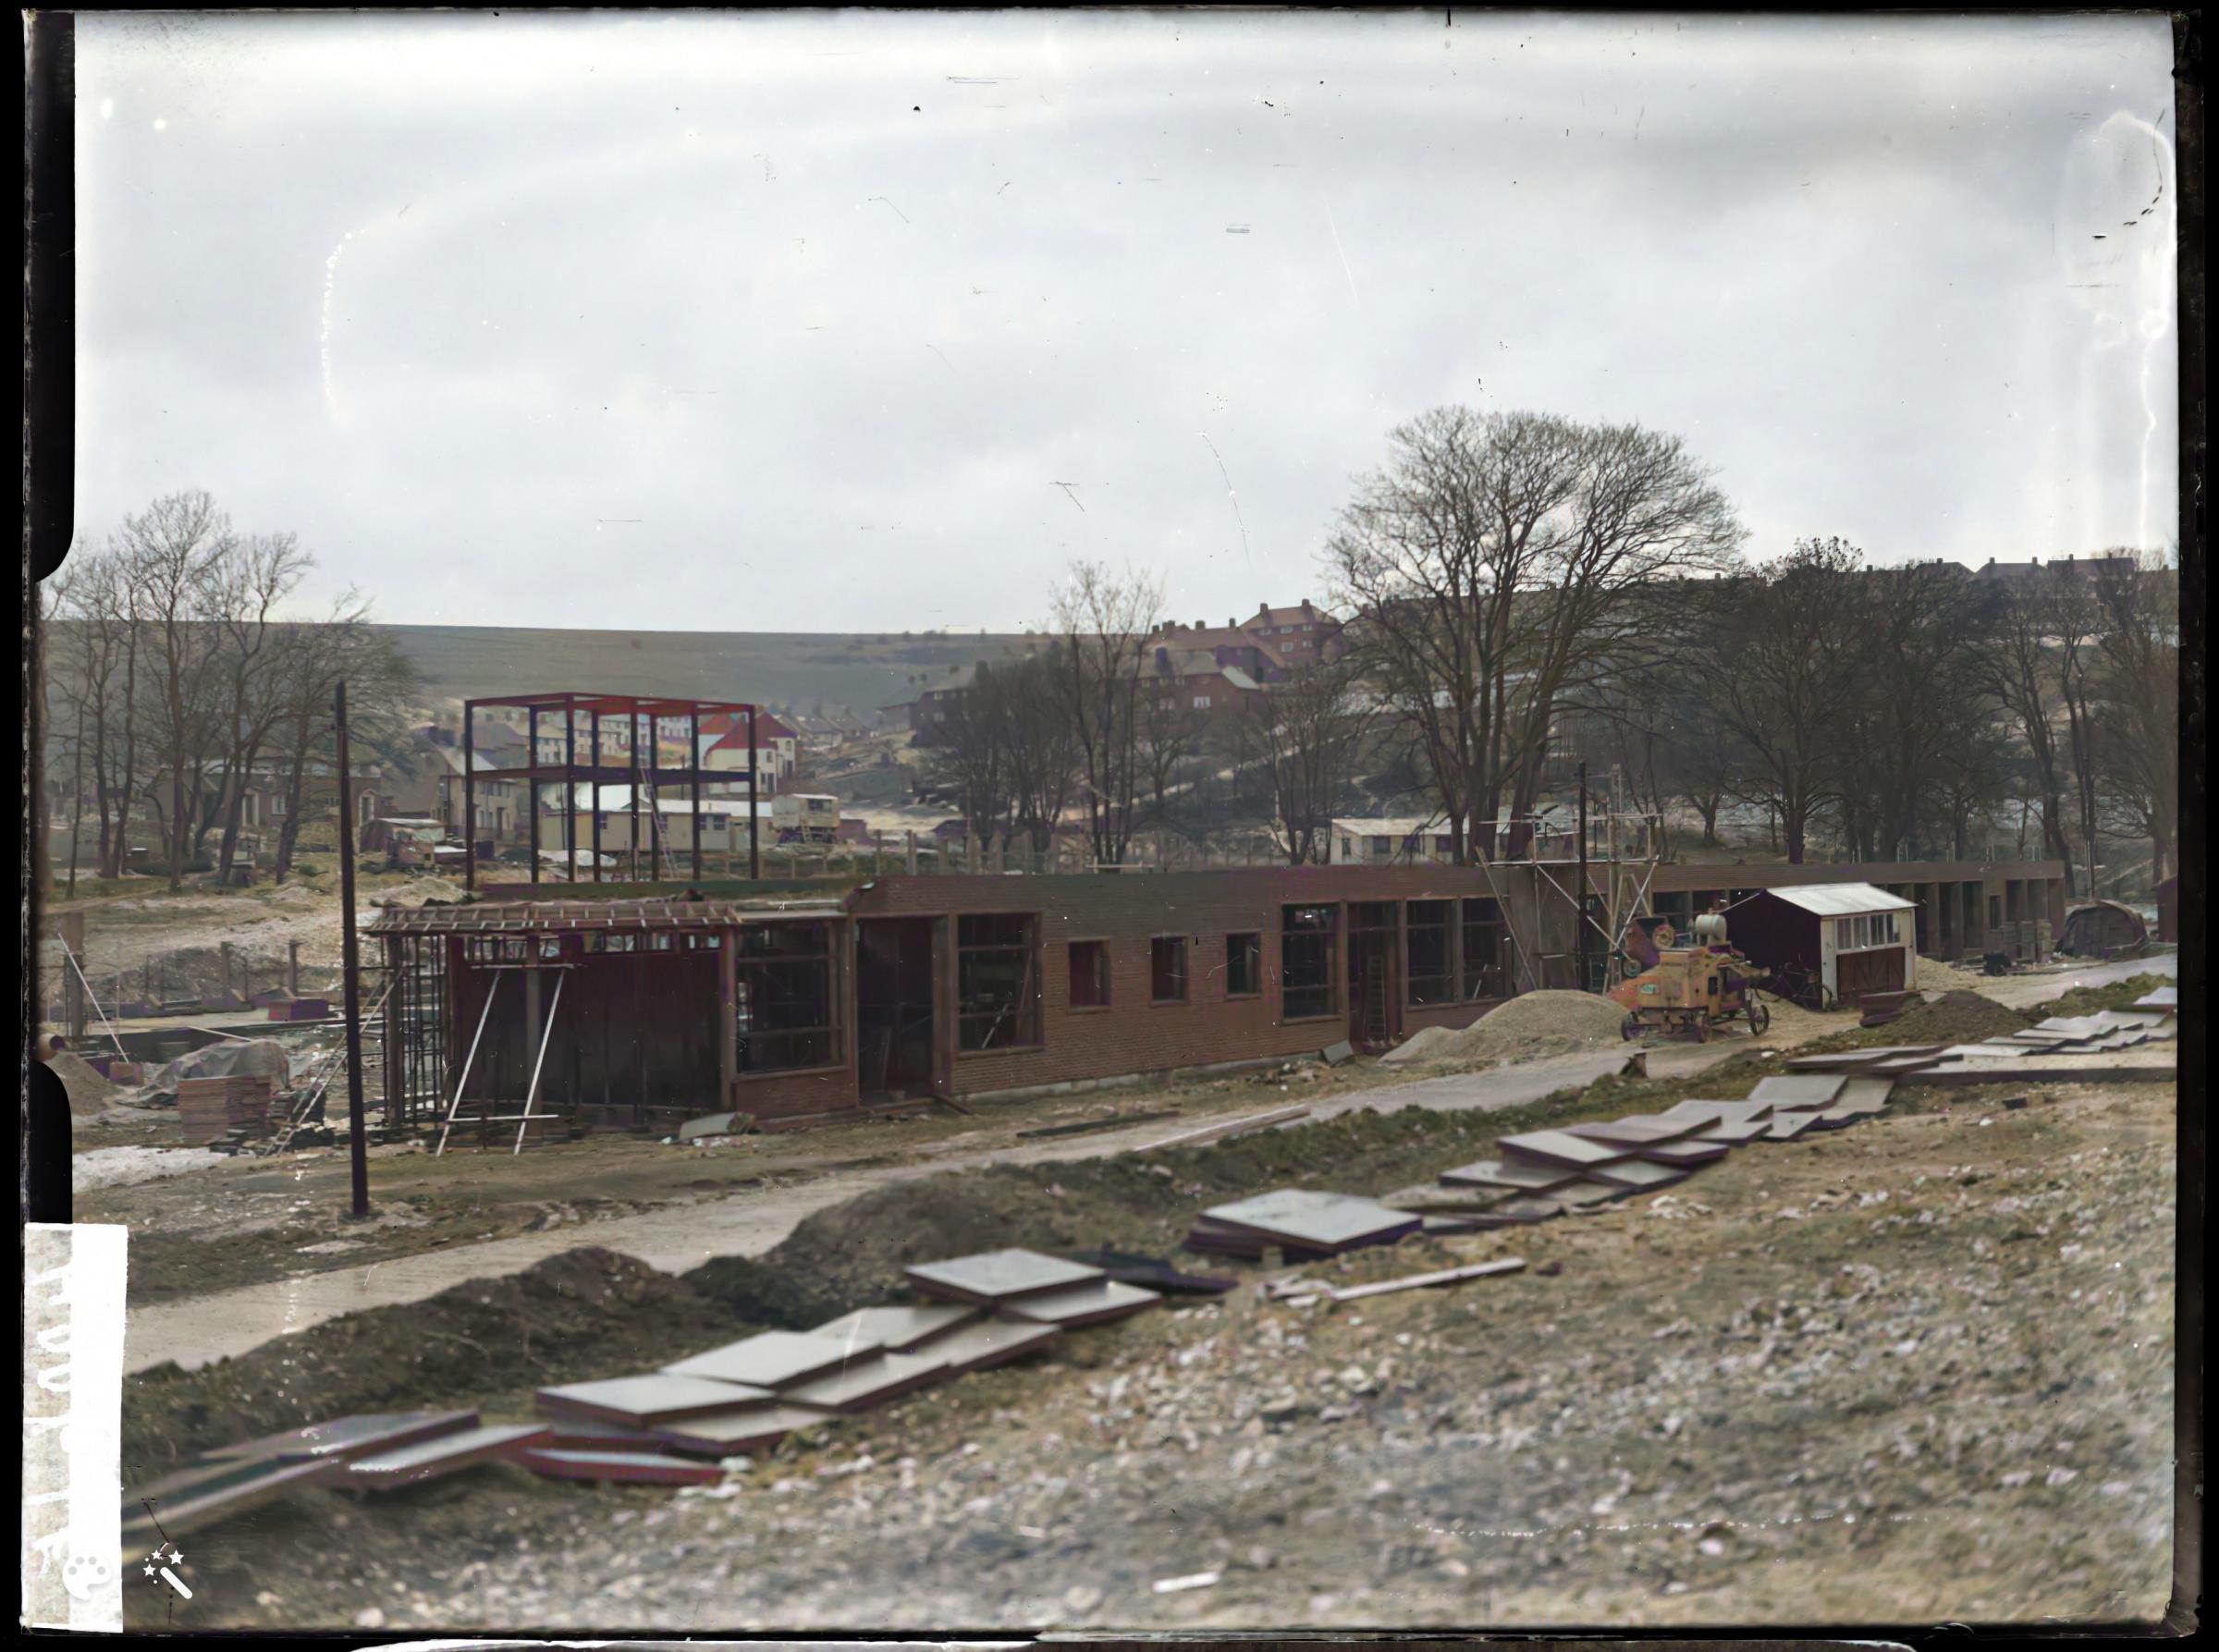 Bevendean School under construction, 1950